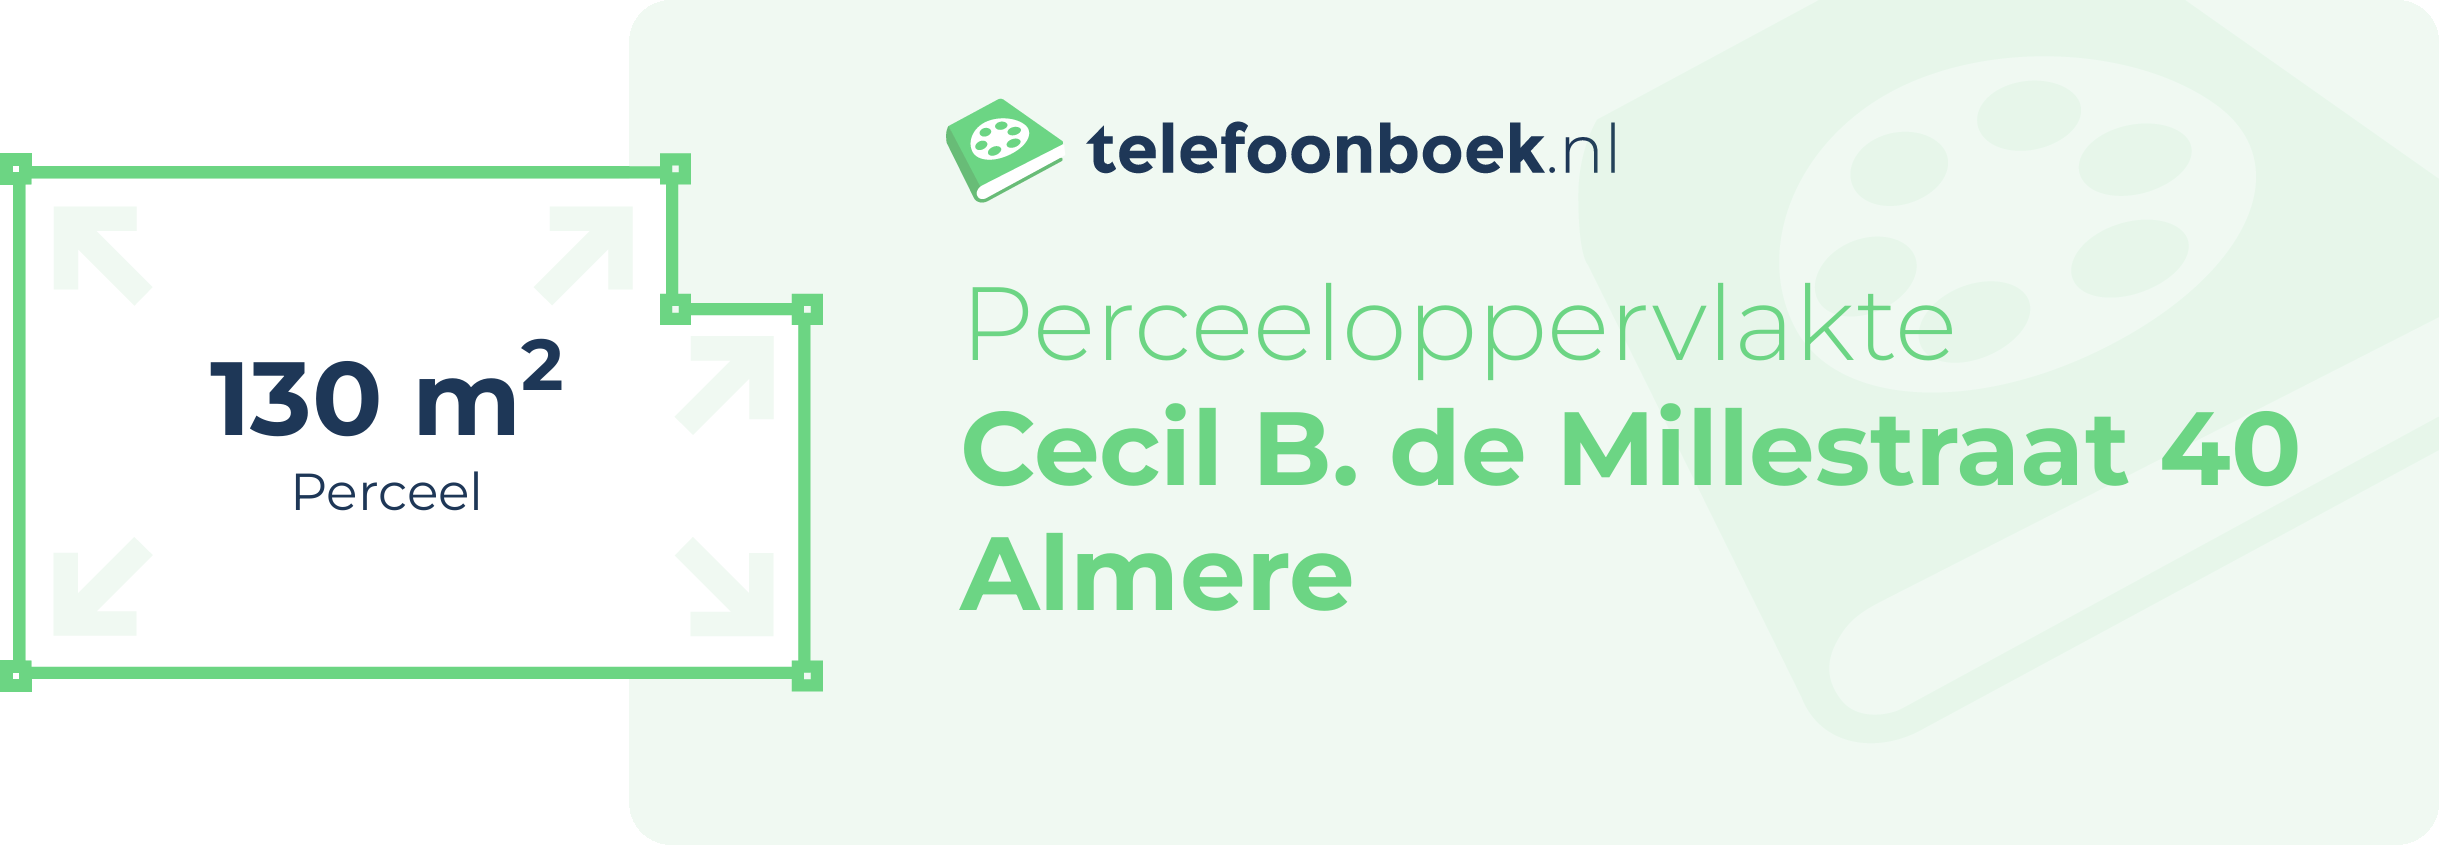 Perceeloppervlakte Cecil B. De Millestraat 40 Almere